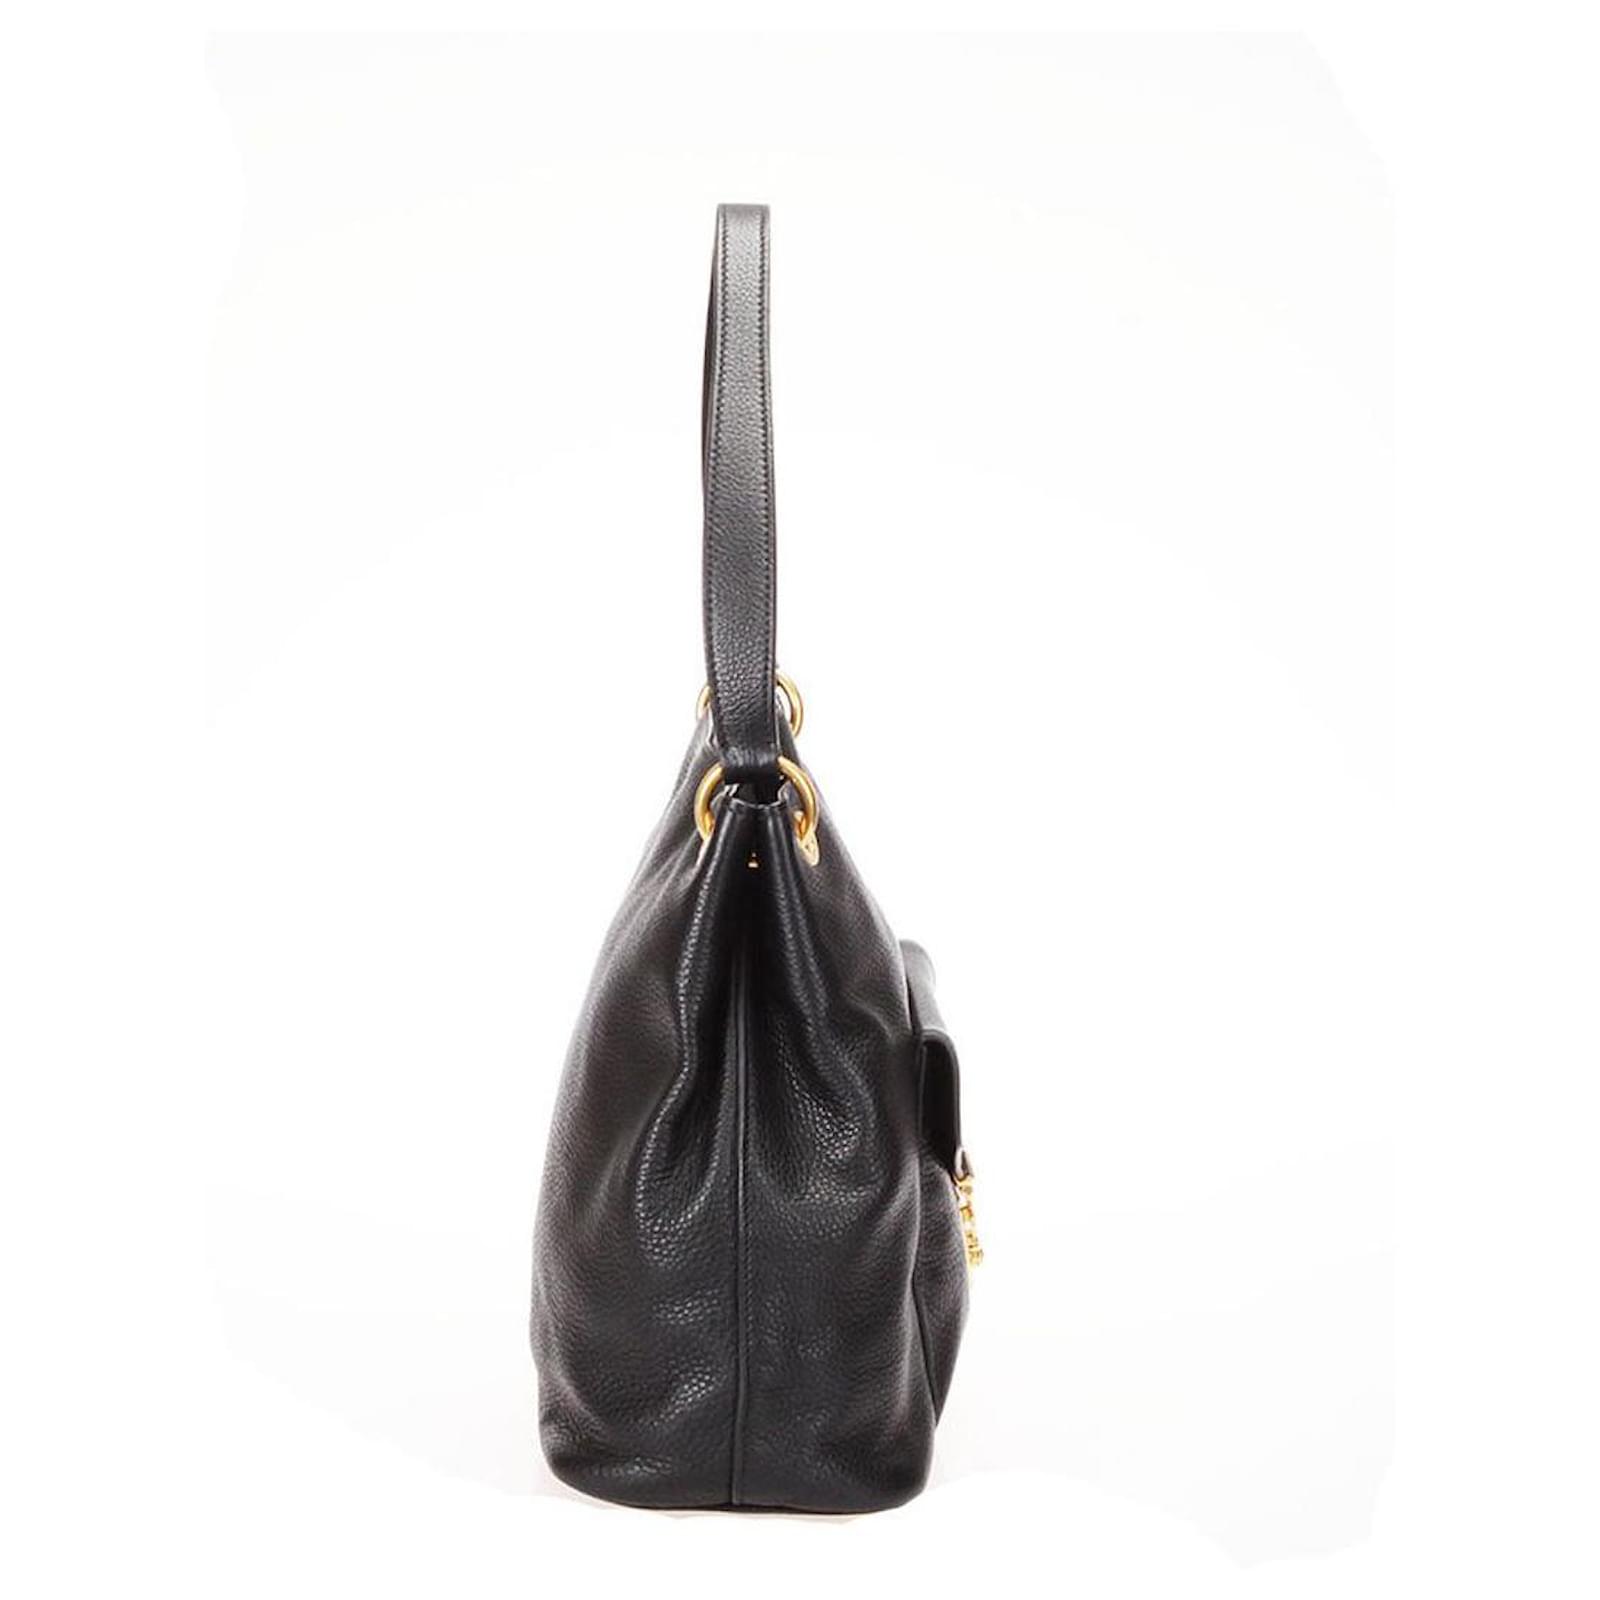 Miu Miu Vitello Daino Shoulder Bag in black calf leather leather ref ...